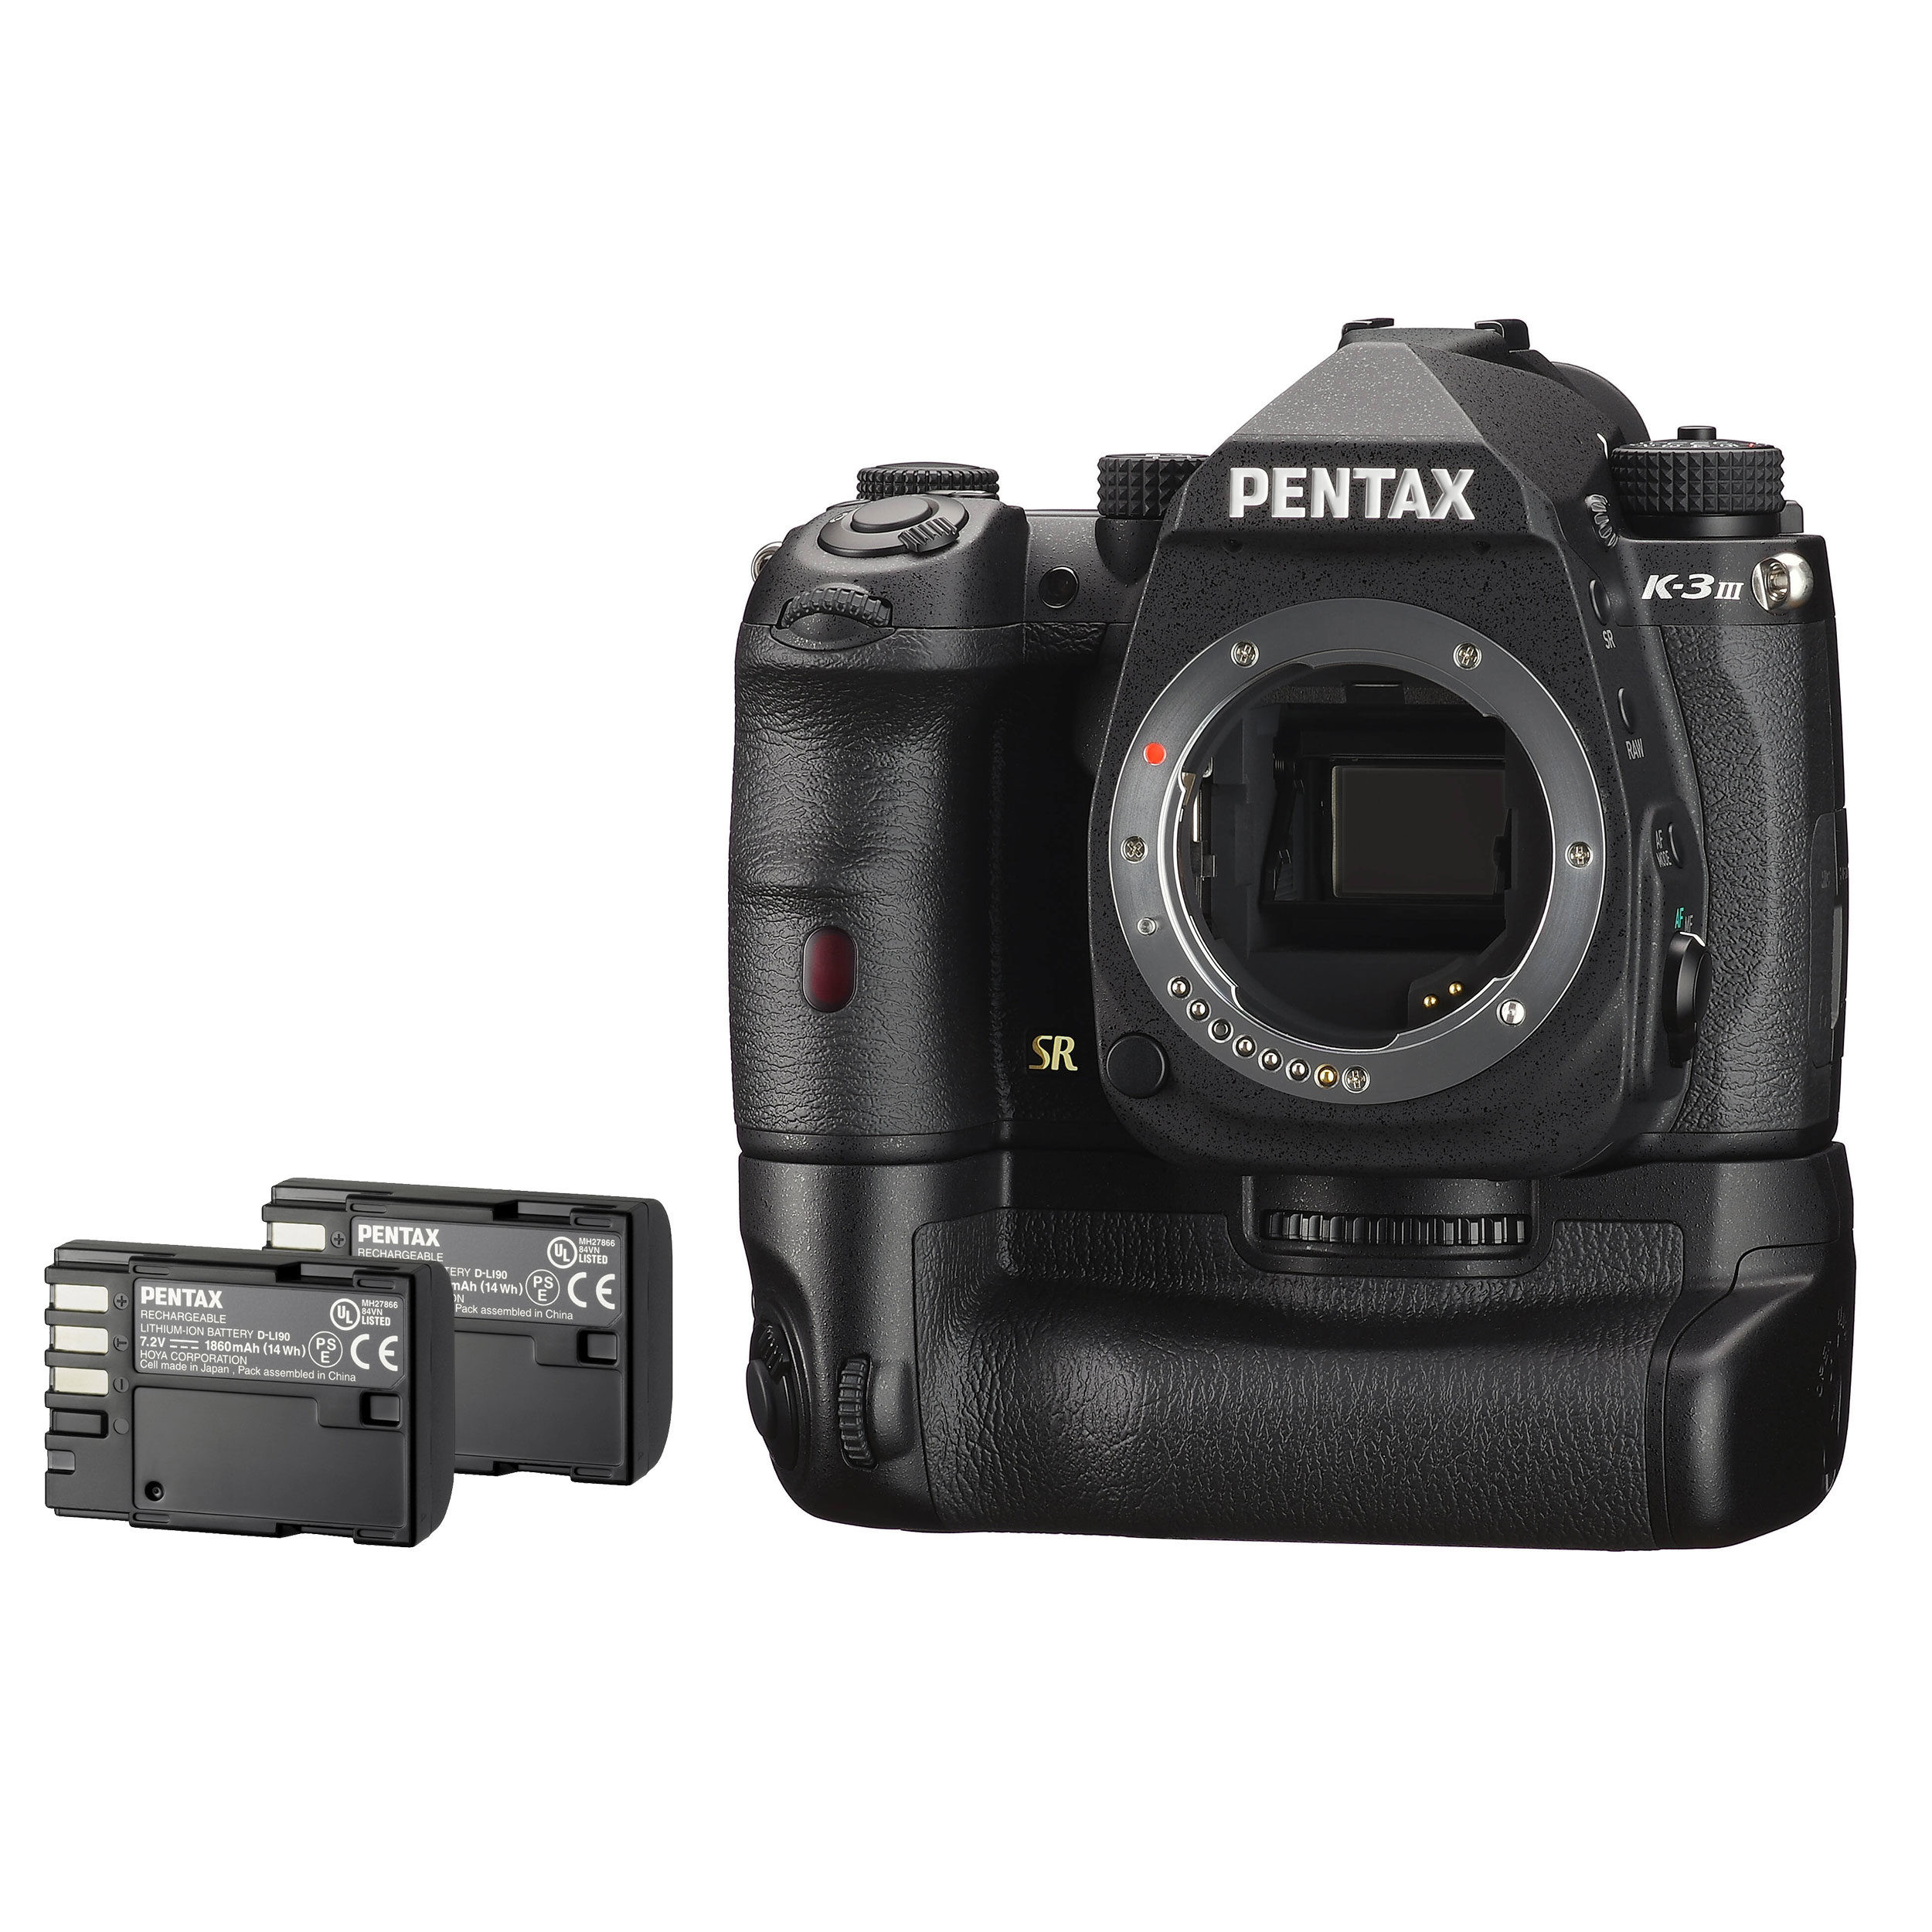 Fotocamera reflex Pentax K-3 Mark III Black european Kit - Body